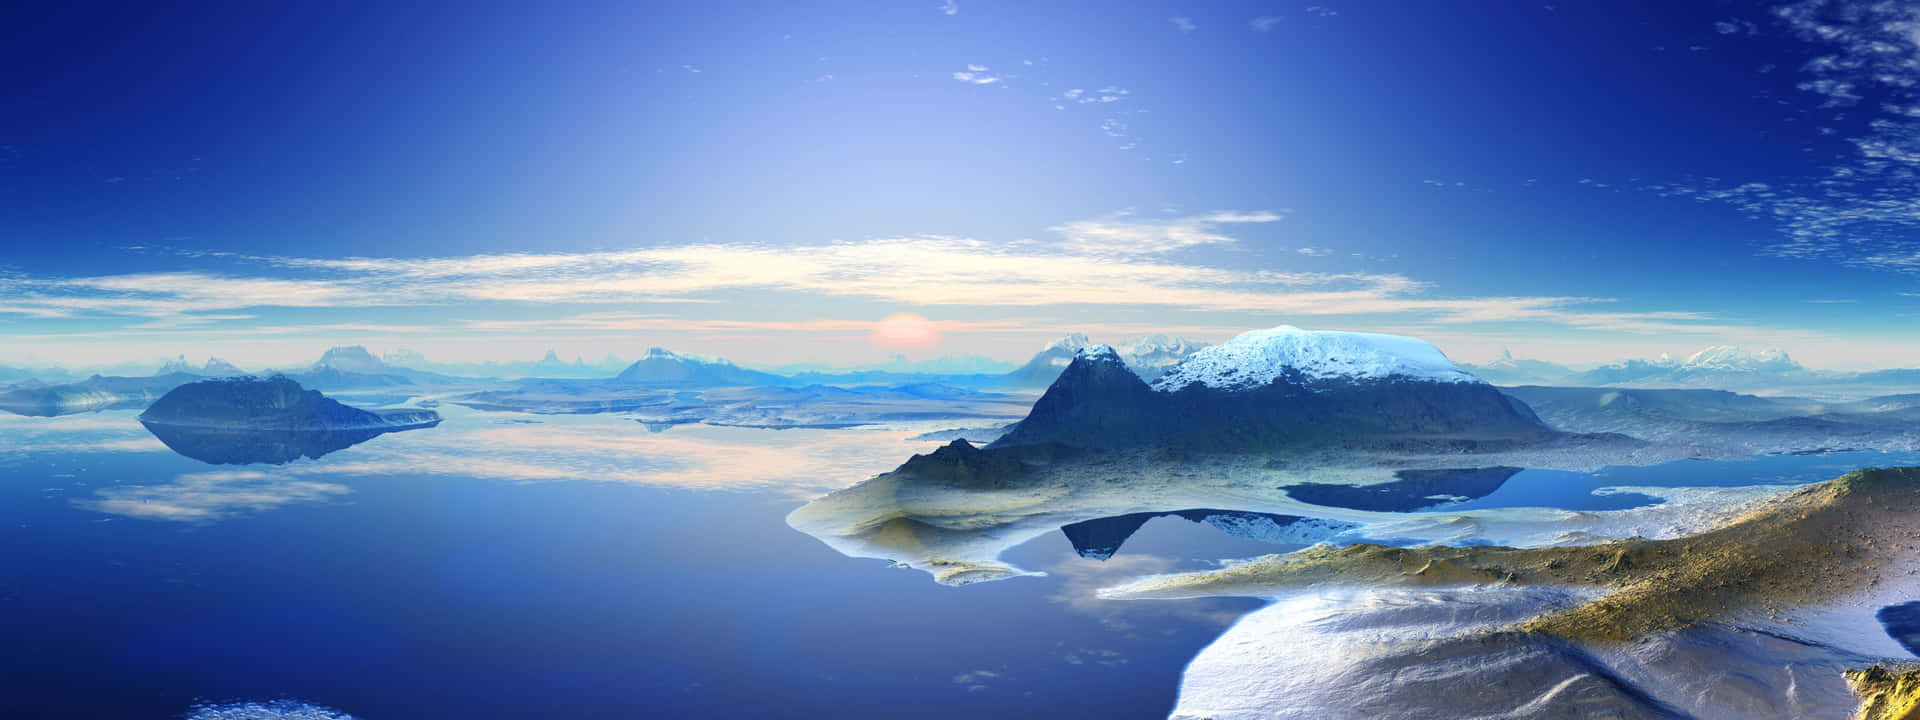 Waters Surrounding Mountains As A Panoramic Desktop